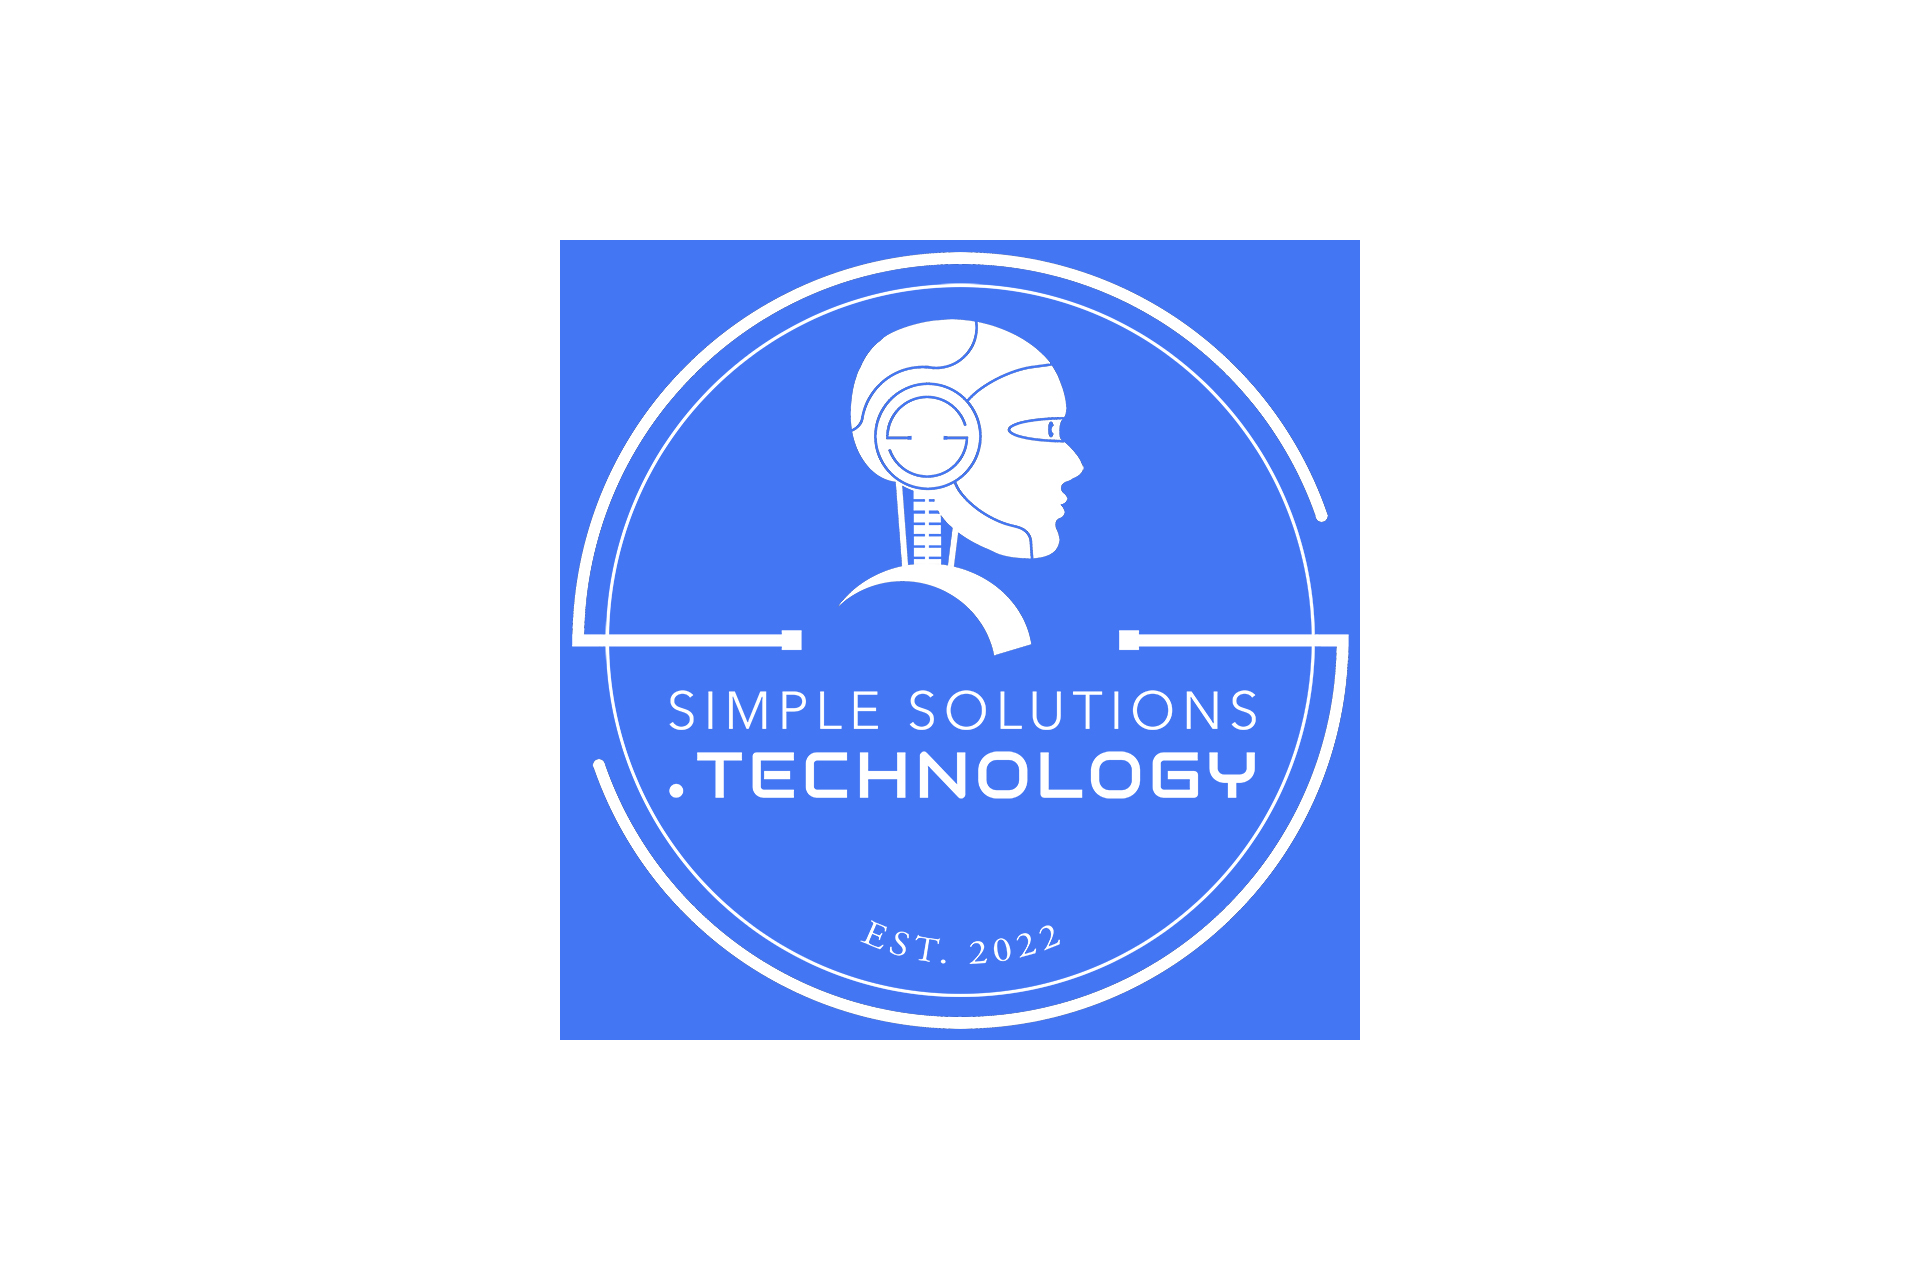 SimpleSolutions logo